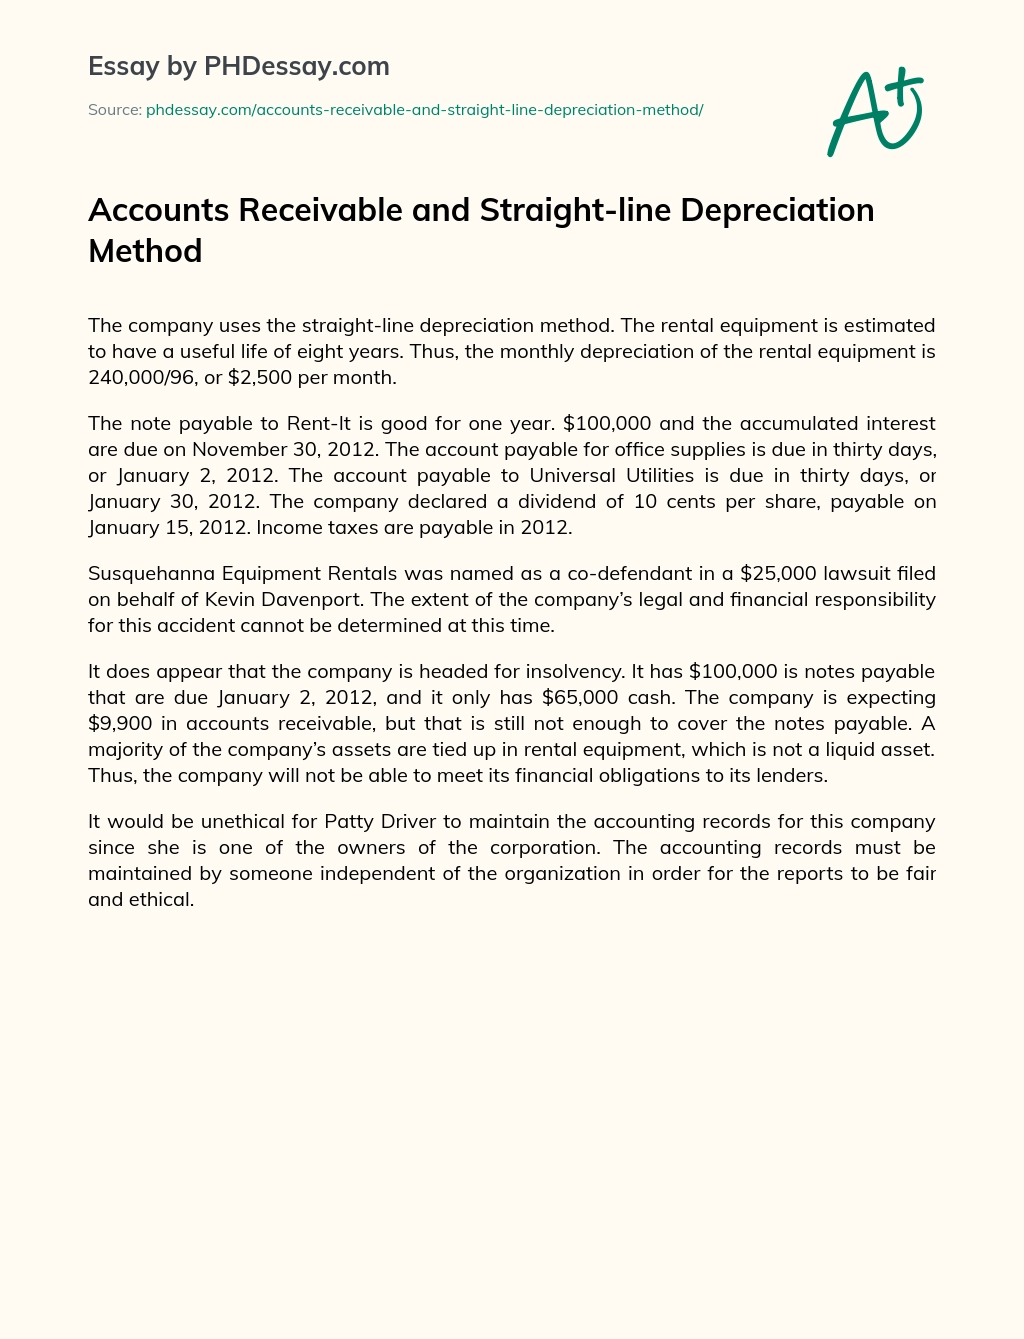 Accounts Receivable and Straight-line Depreciation Method essay